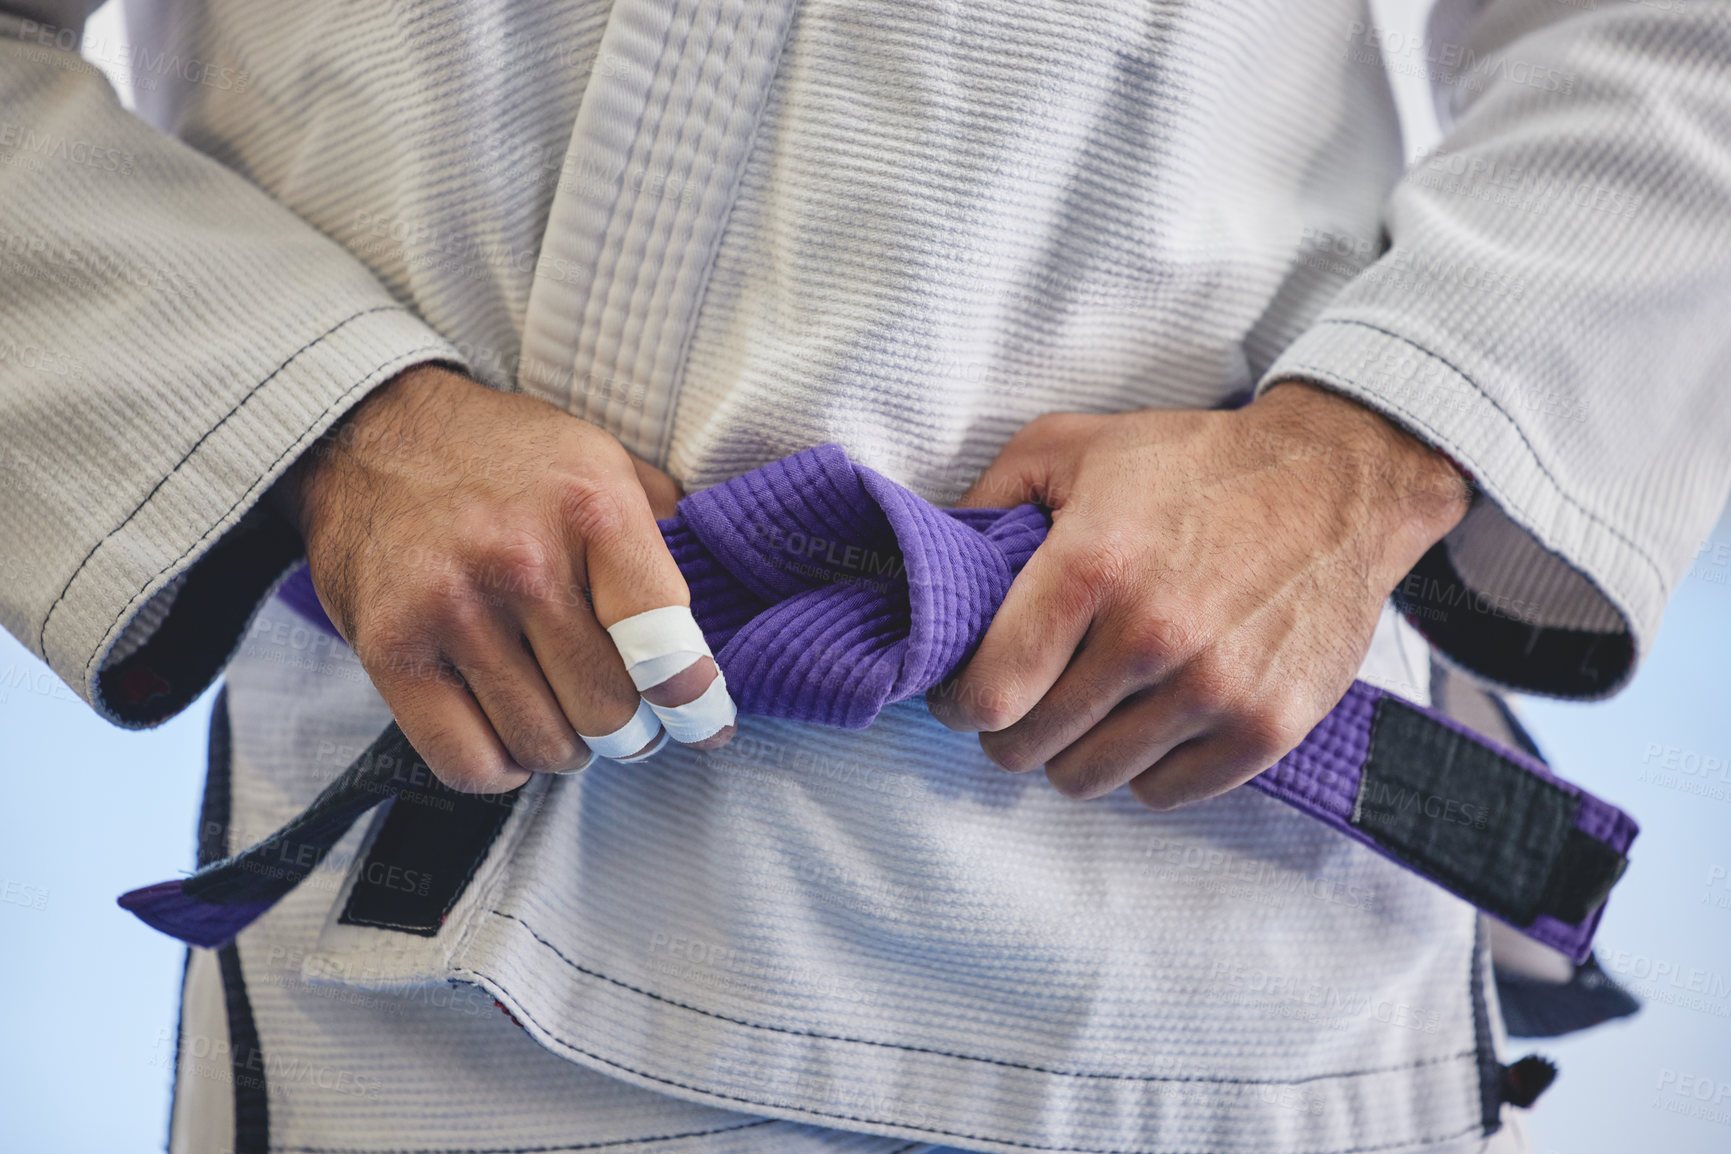 Buy stock photo Cropped shot of an unrecognizable man tying a purple belt around hist waist while in full jiu jitsu gi